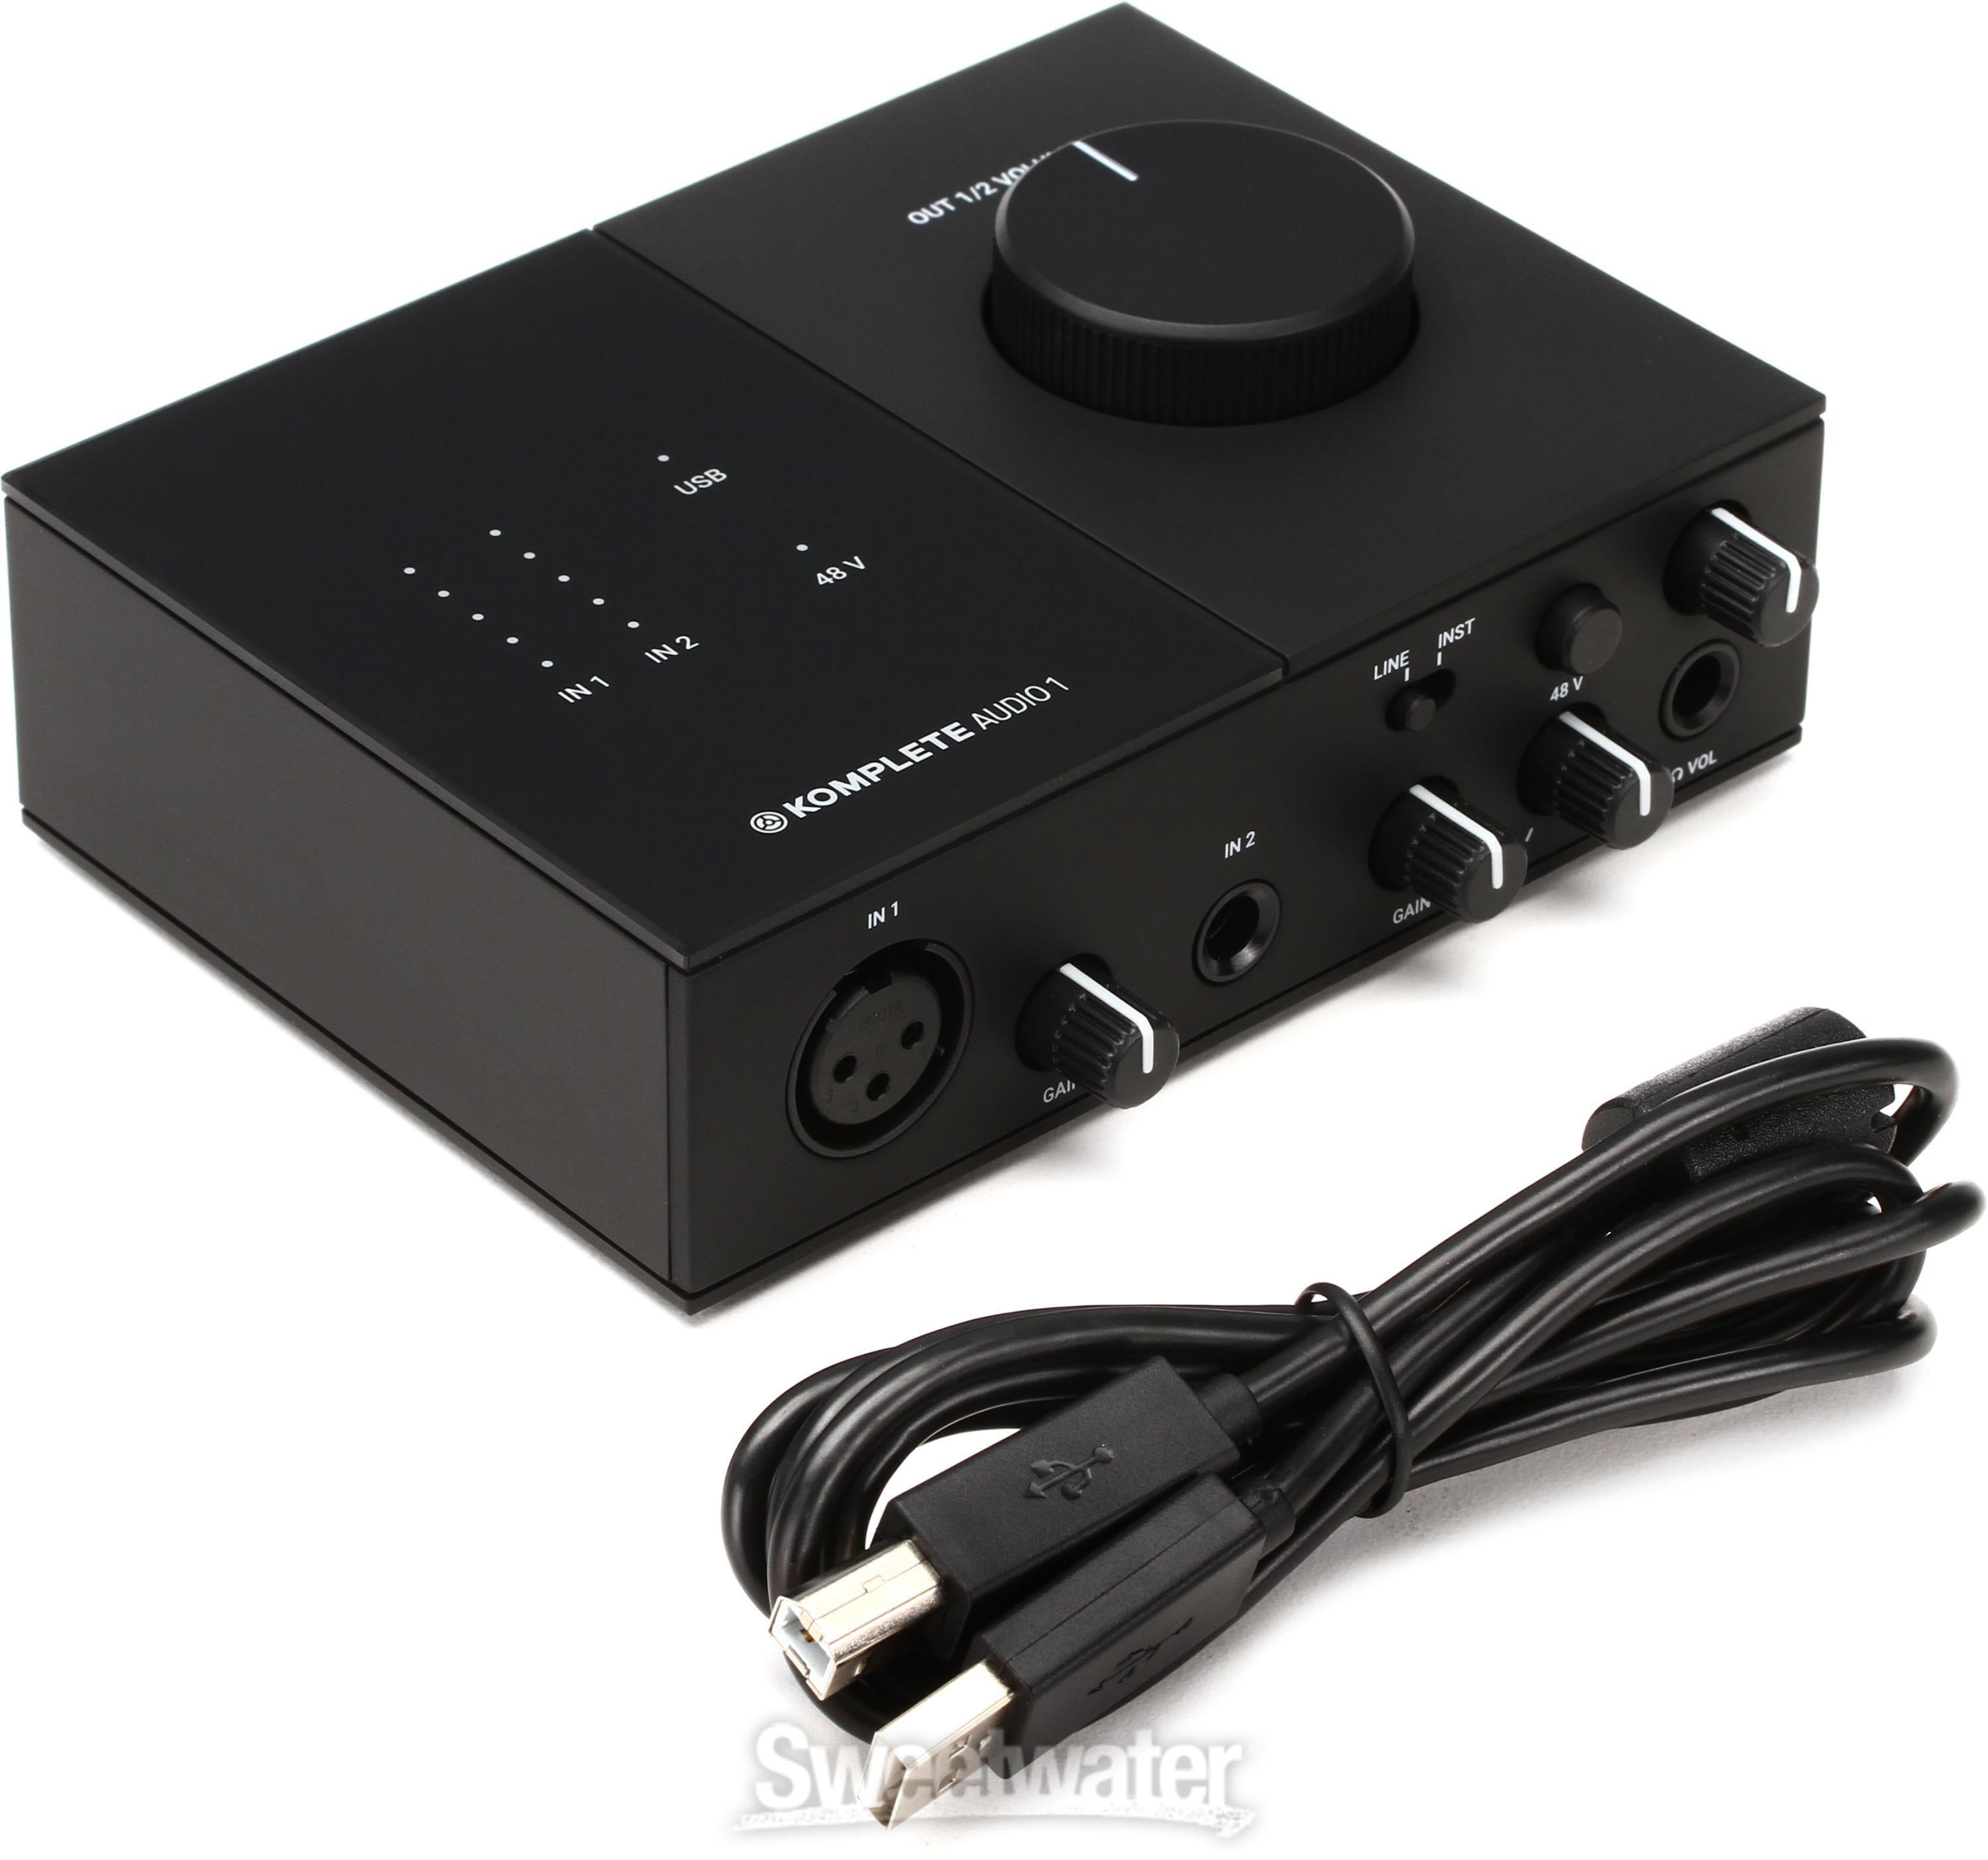 Komplete Audio 1 USB Audio Interface - Sweetwater